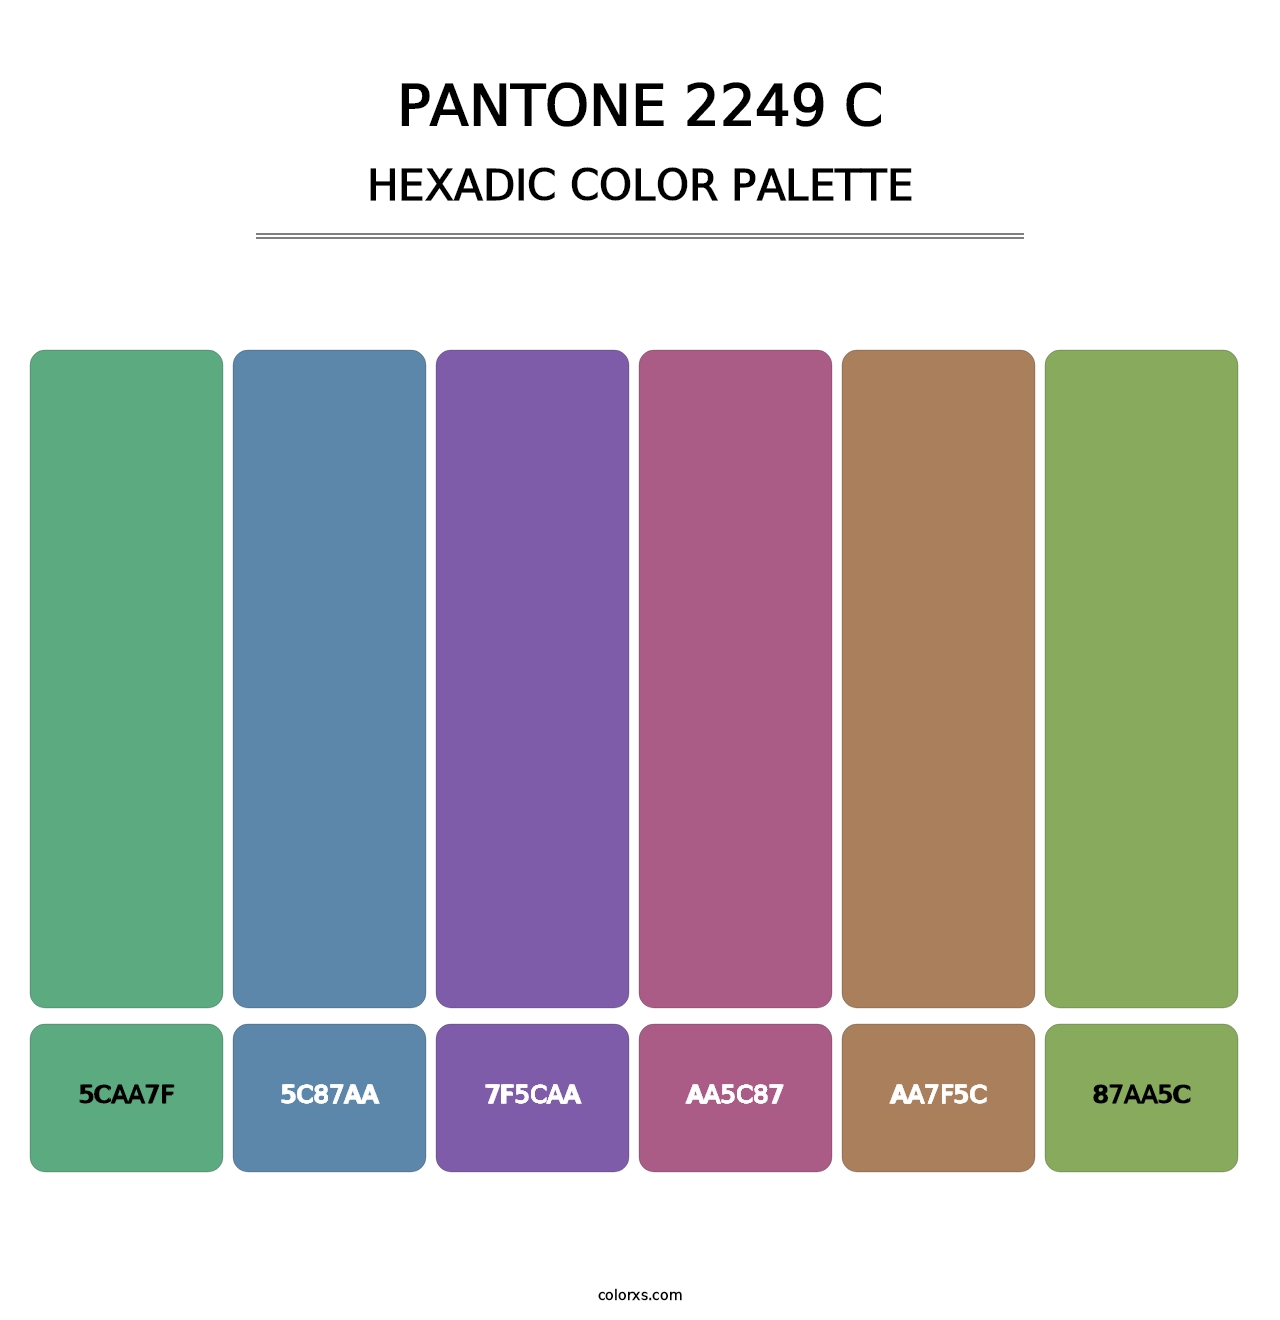 PANTONE 2249 C - Hexadic Color Palette